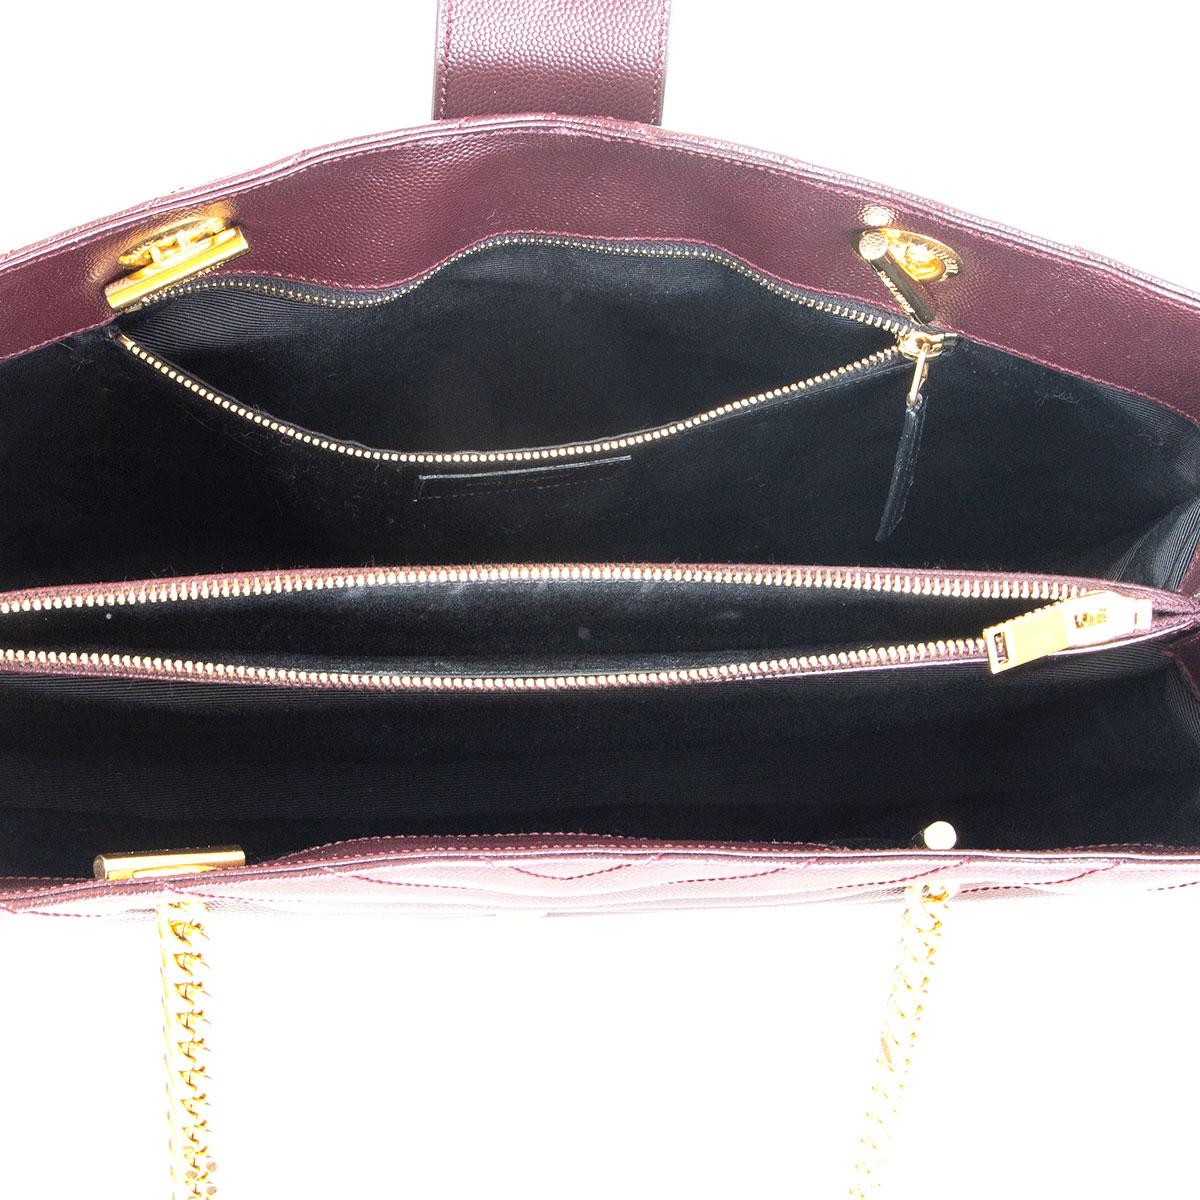 burgundy leather tote bag